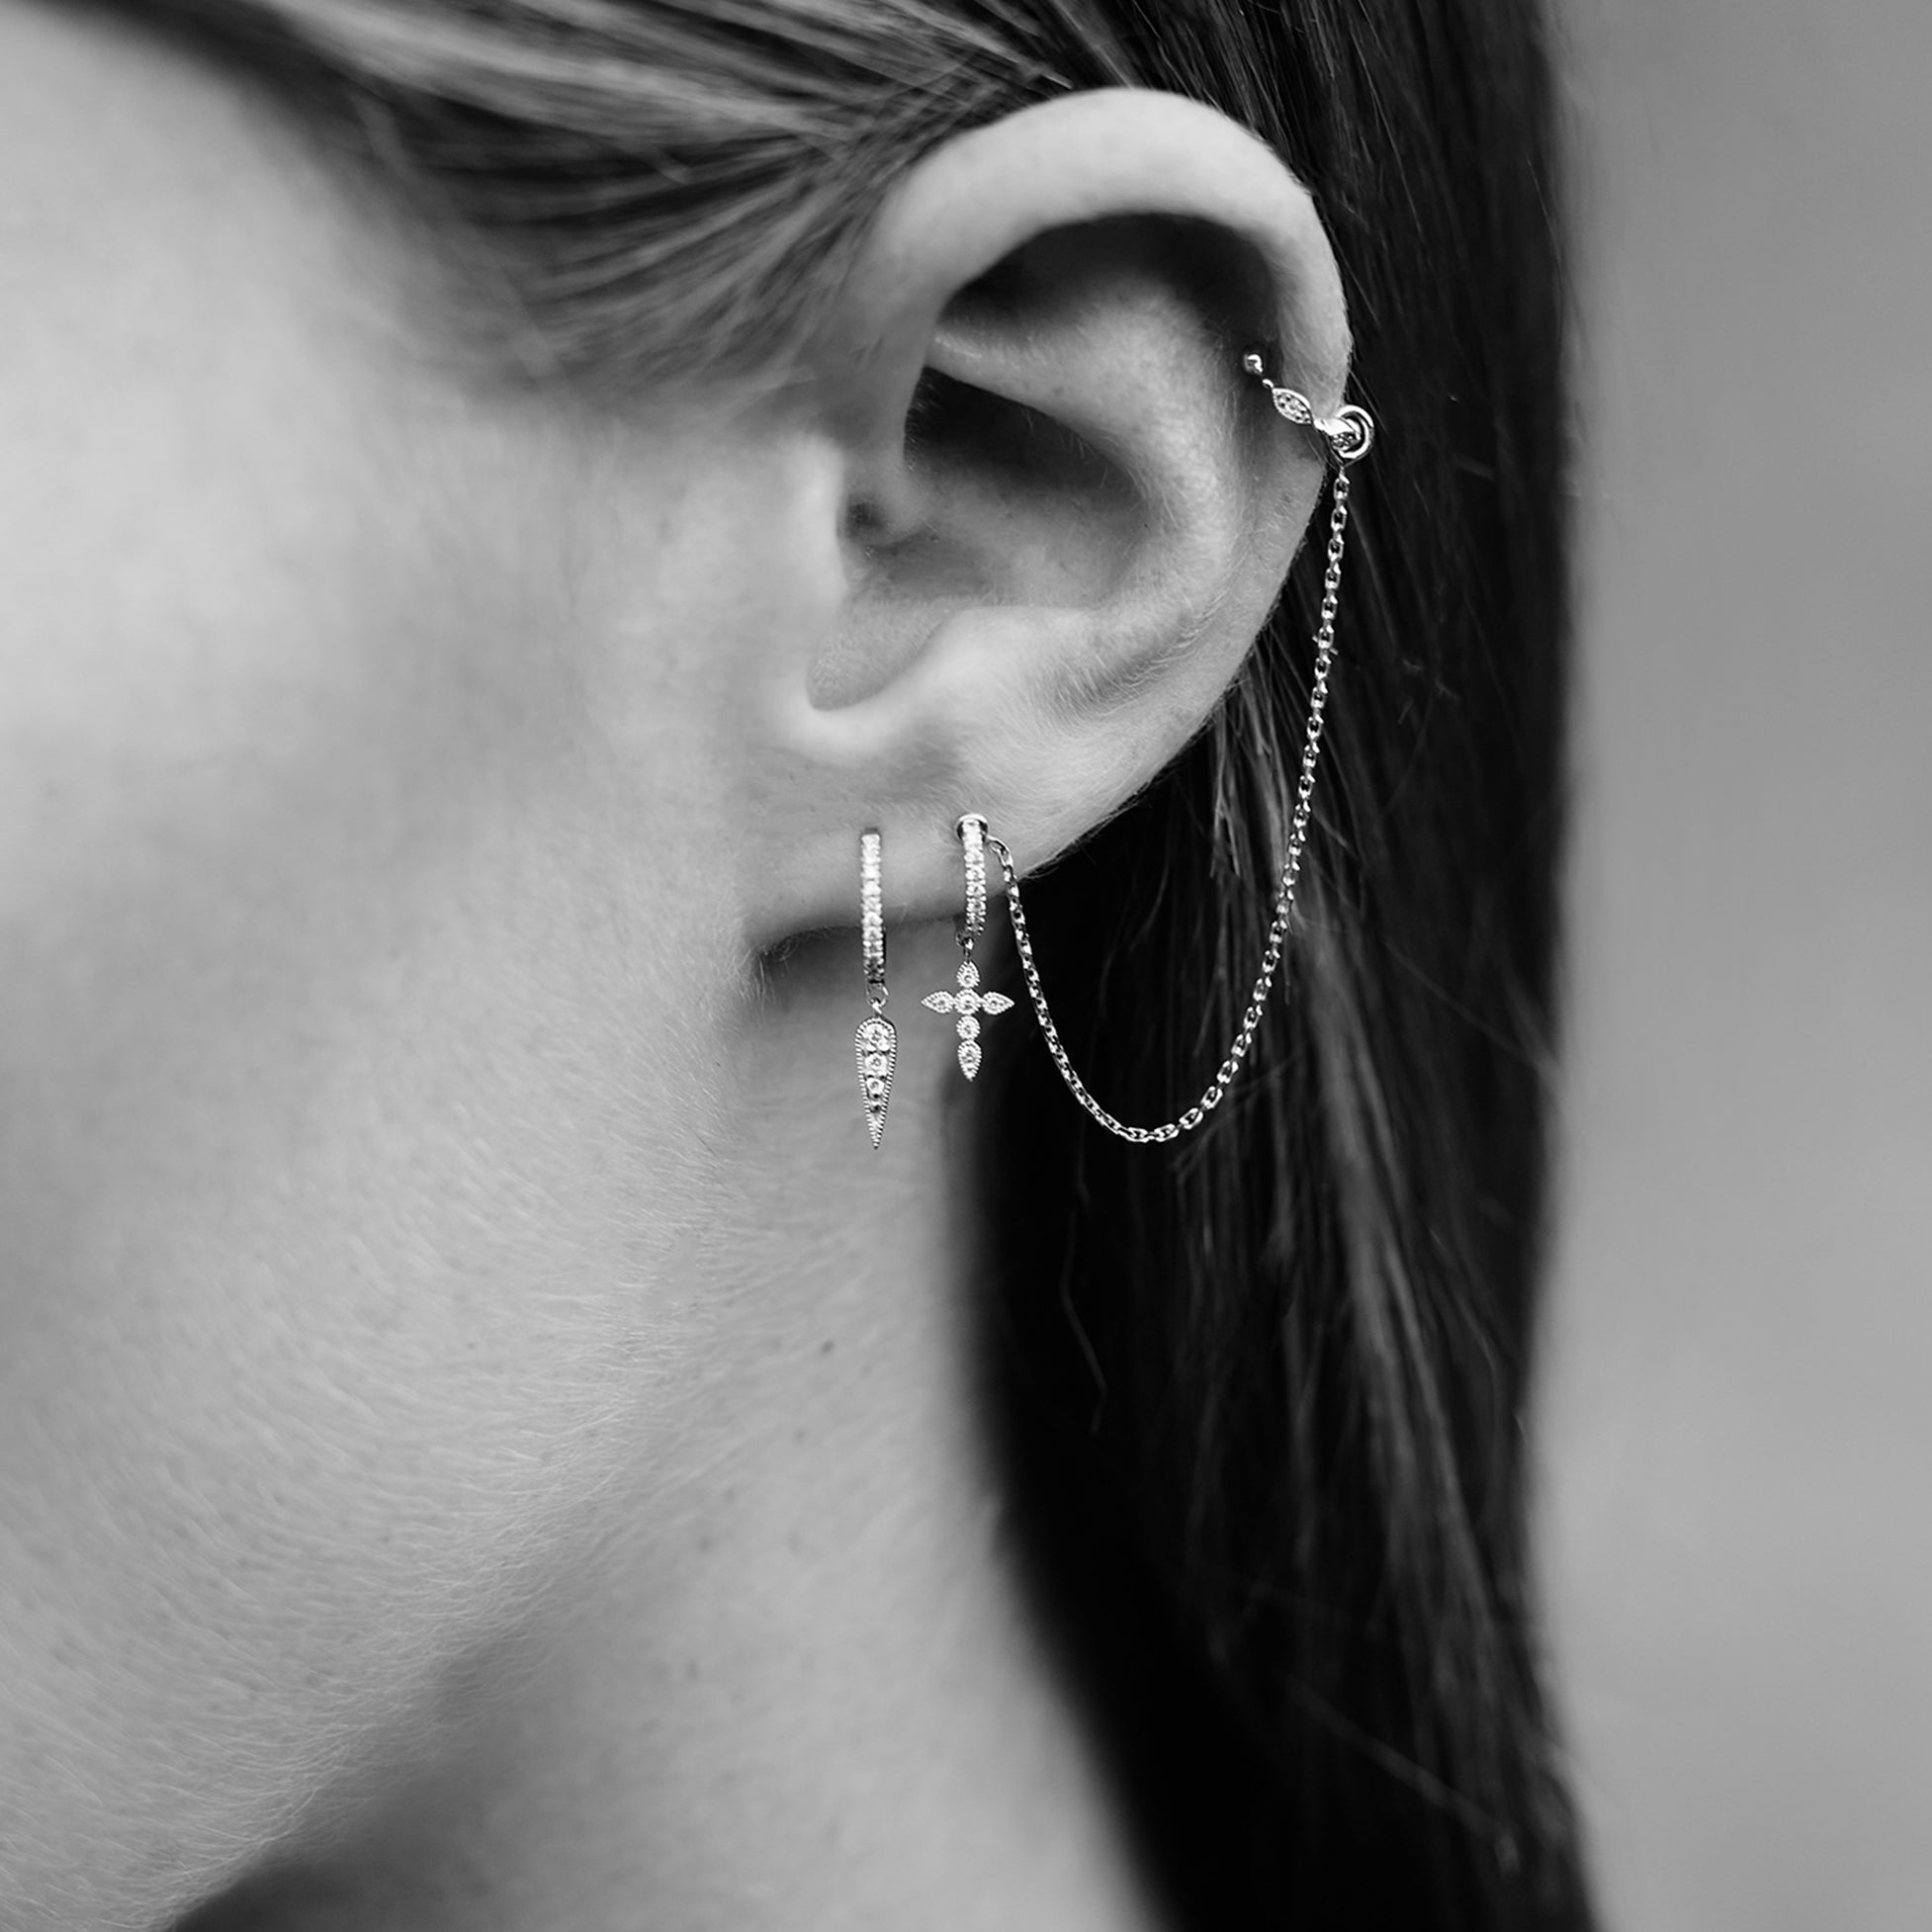 Single earring - Cross tiny hoop